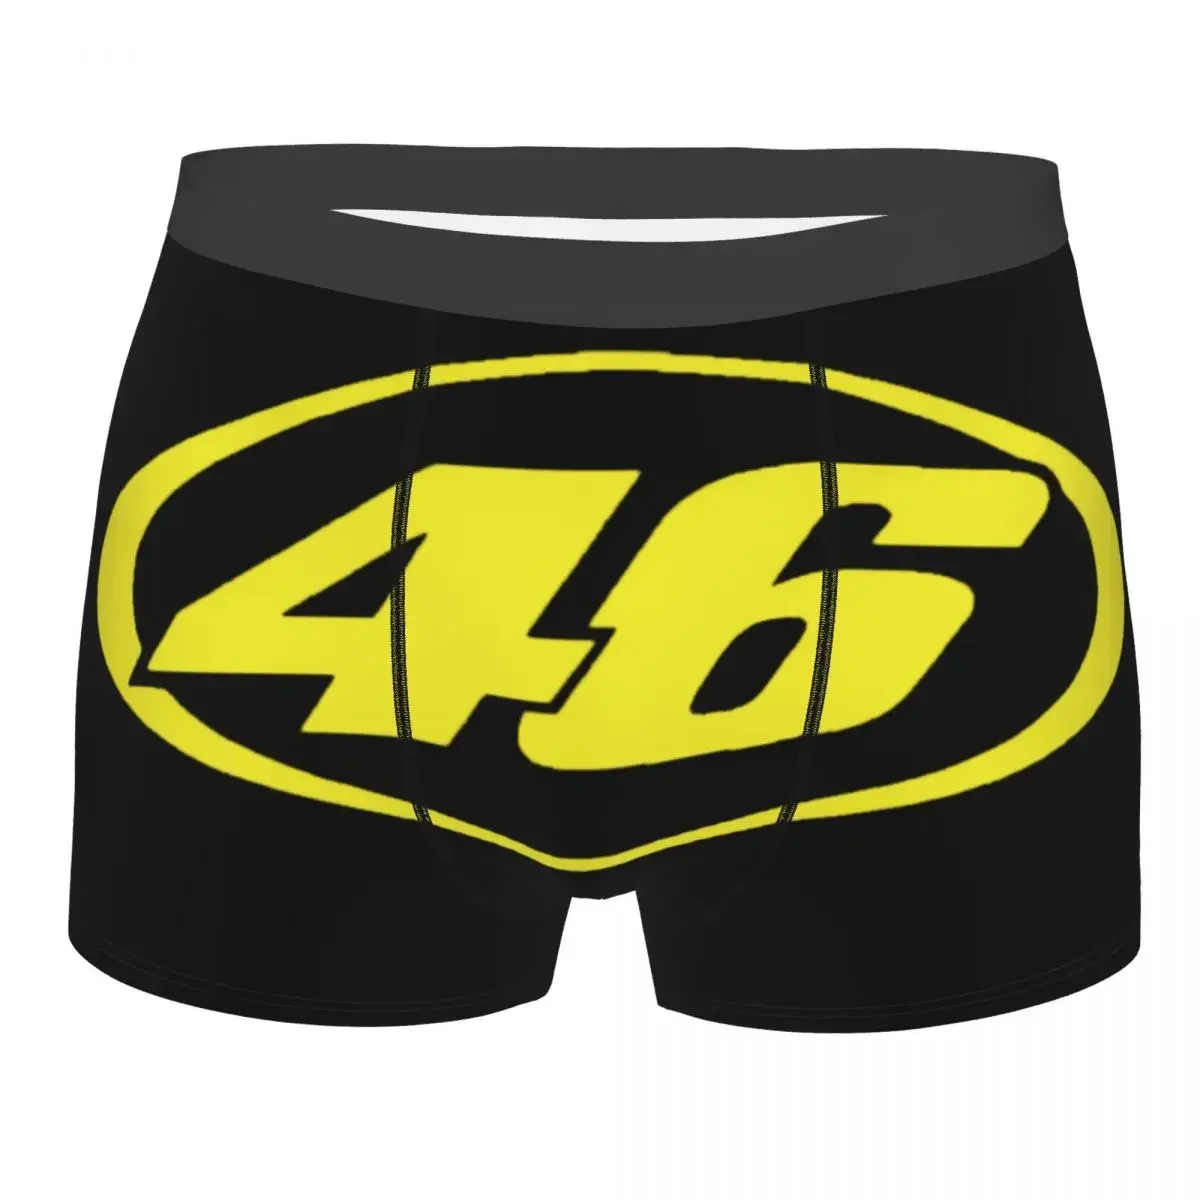 Rossi 46 Novelty Boxer Shorts Printed Custom Boxer Shorts Breathable Underwear Women's Underwear